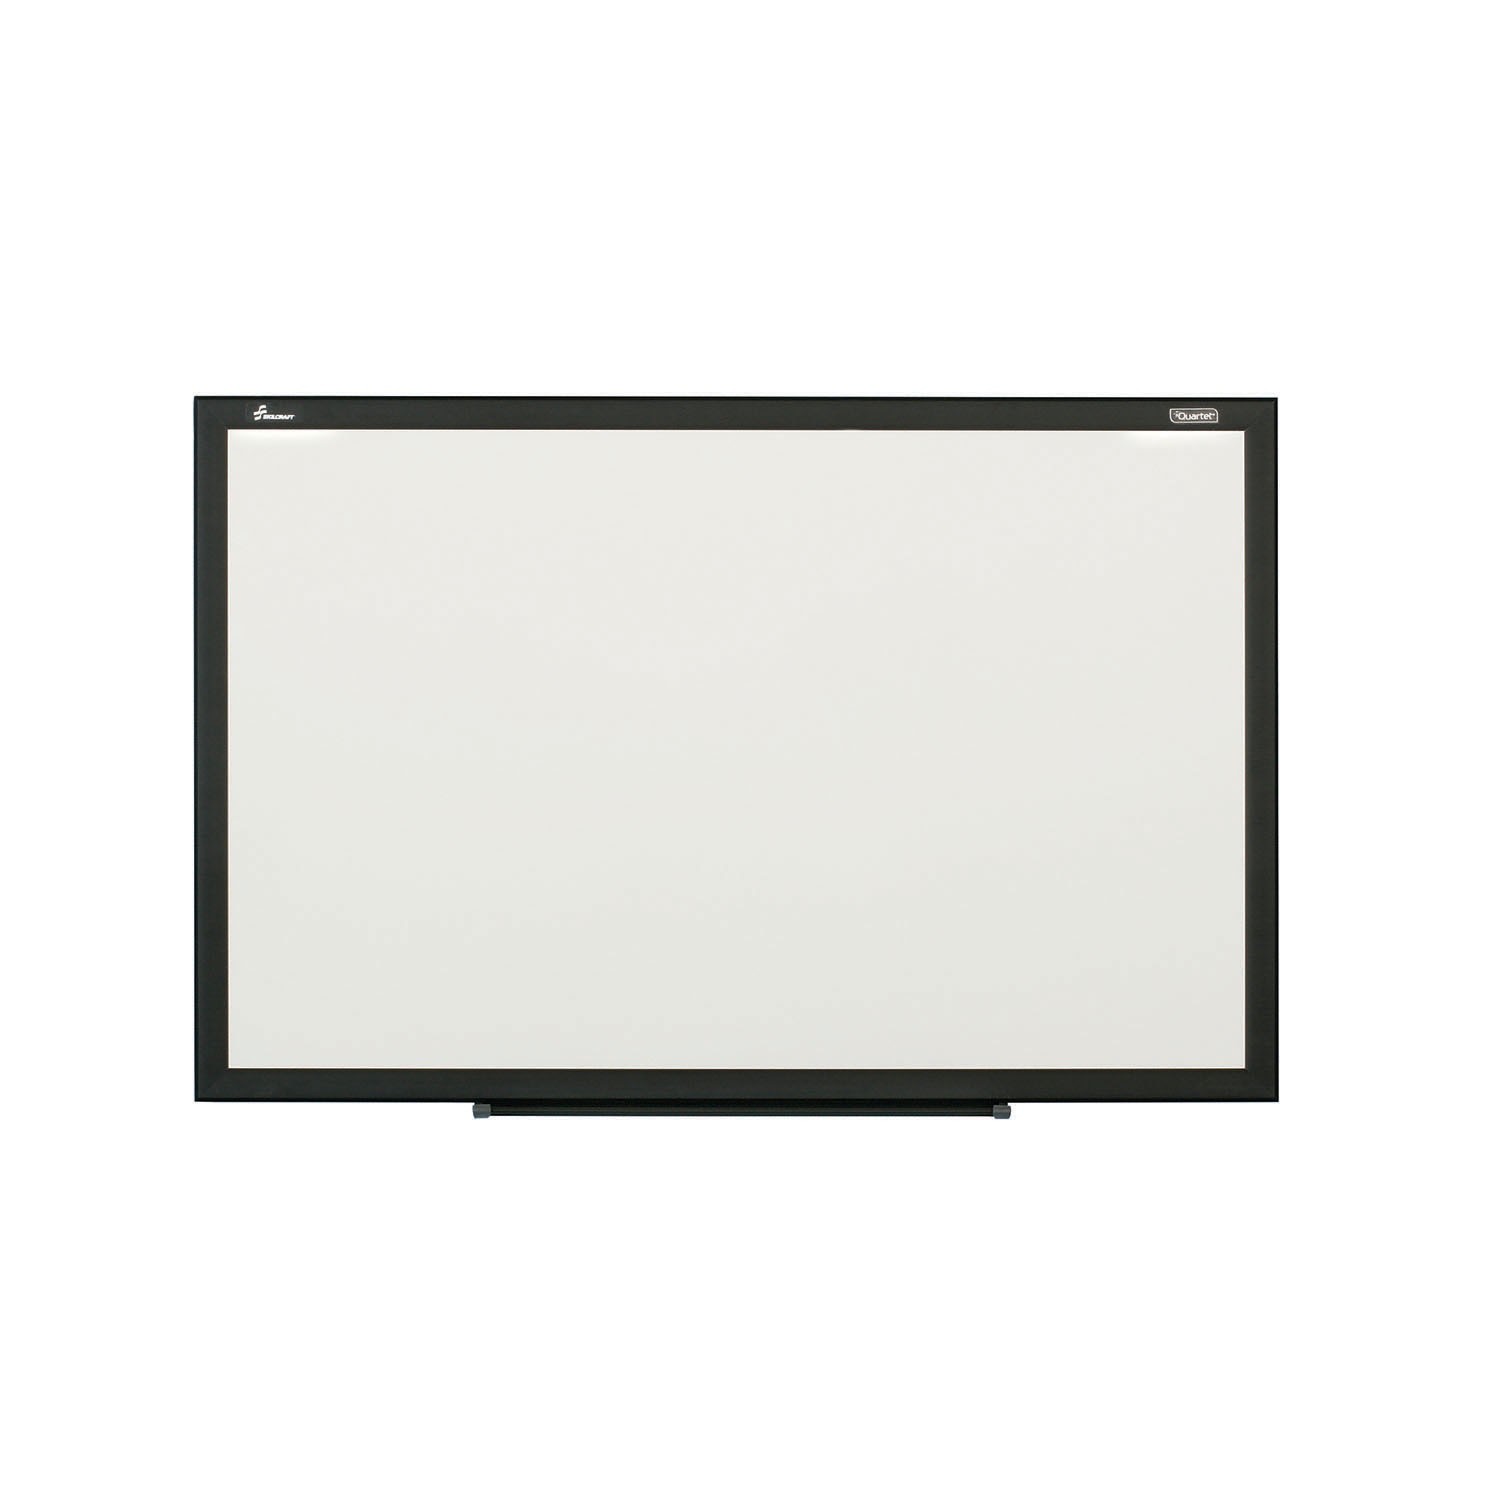 Dry Erase Whiteboard, Magnetic Porcelain Surface, Black Aluminum Frame, 5 x 3